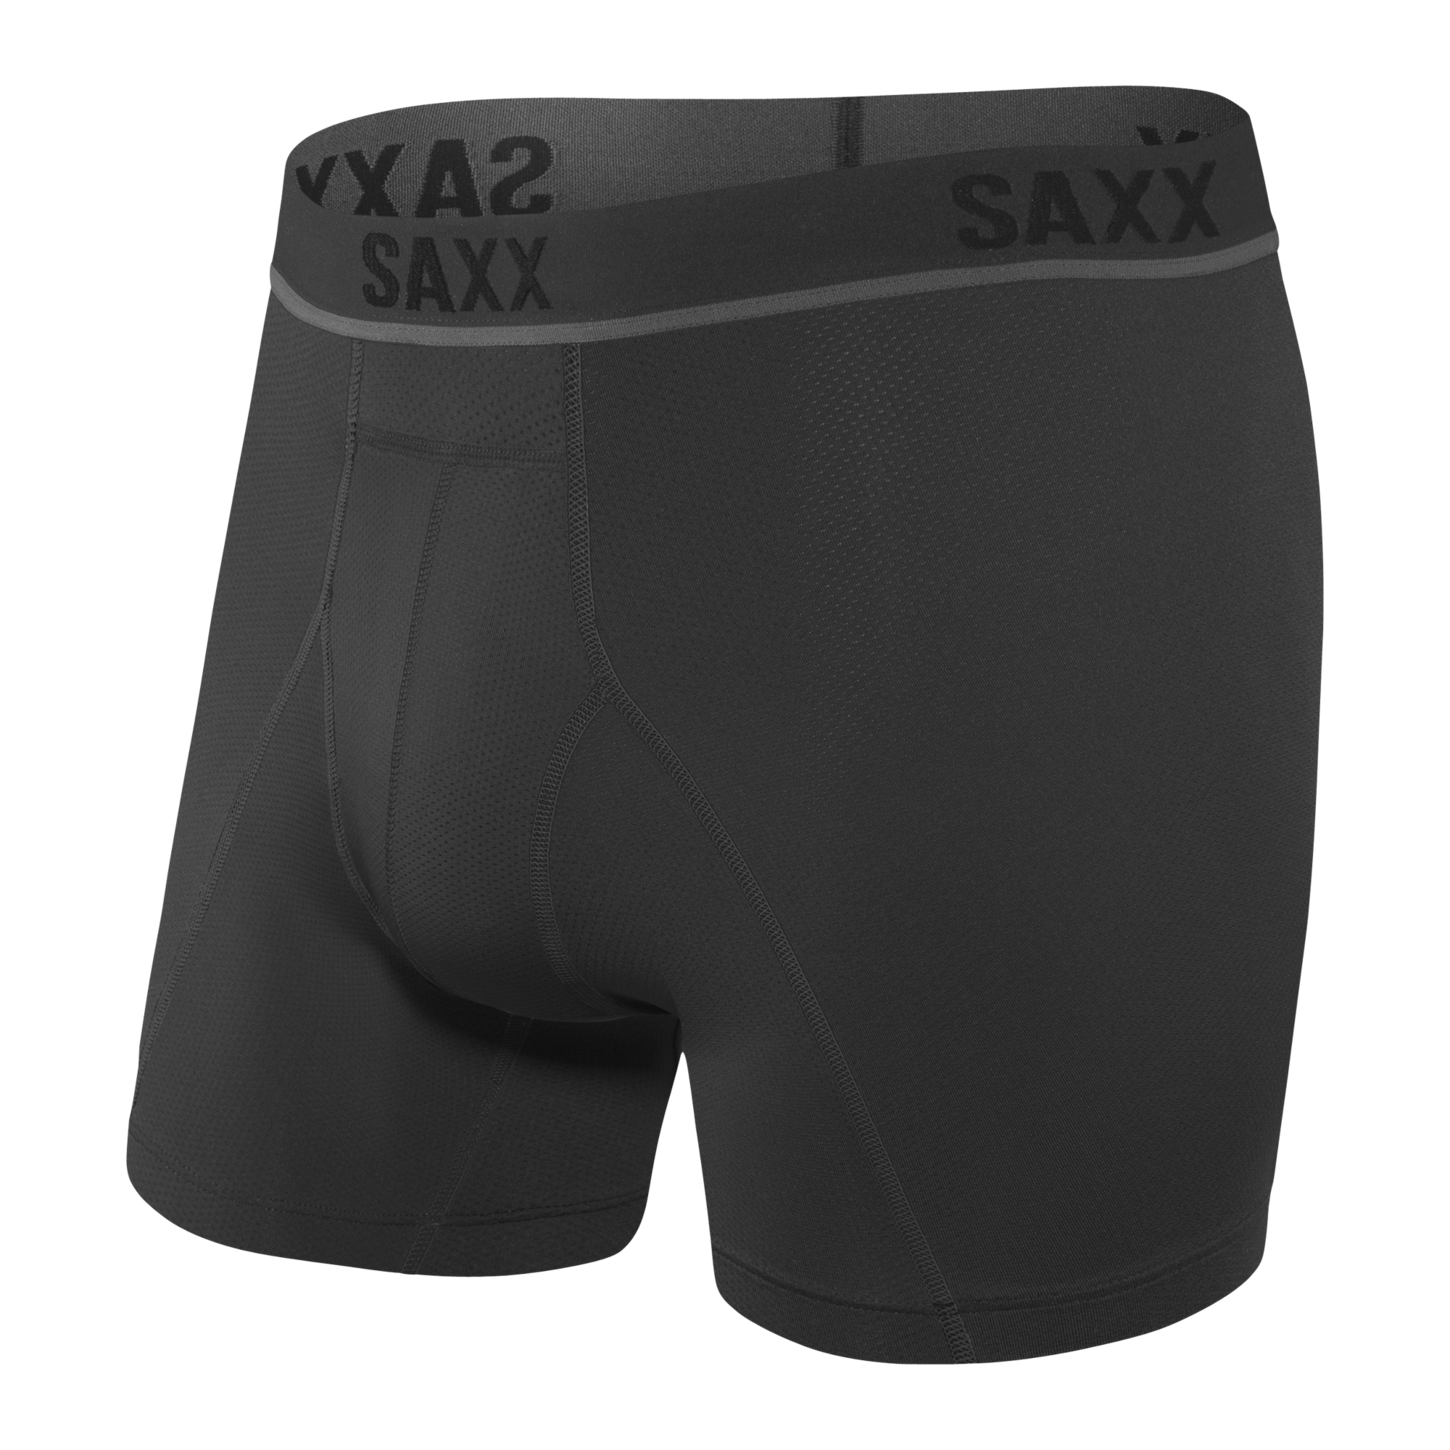 SAXX Ultra Fly Boxers - Polka Pineapple